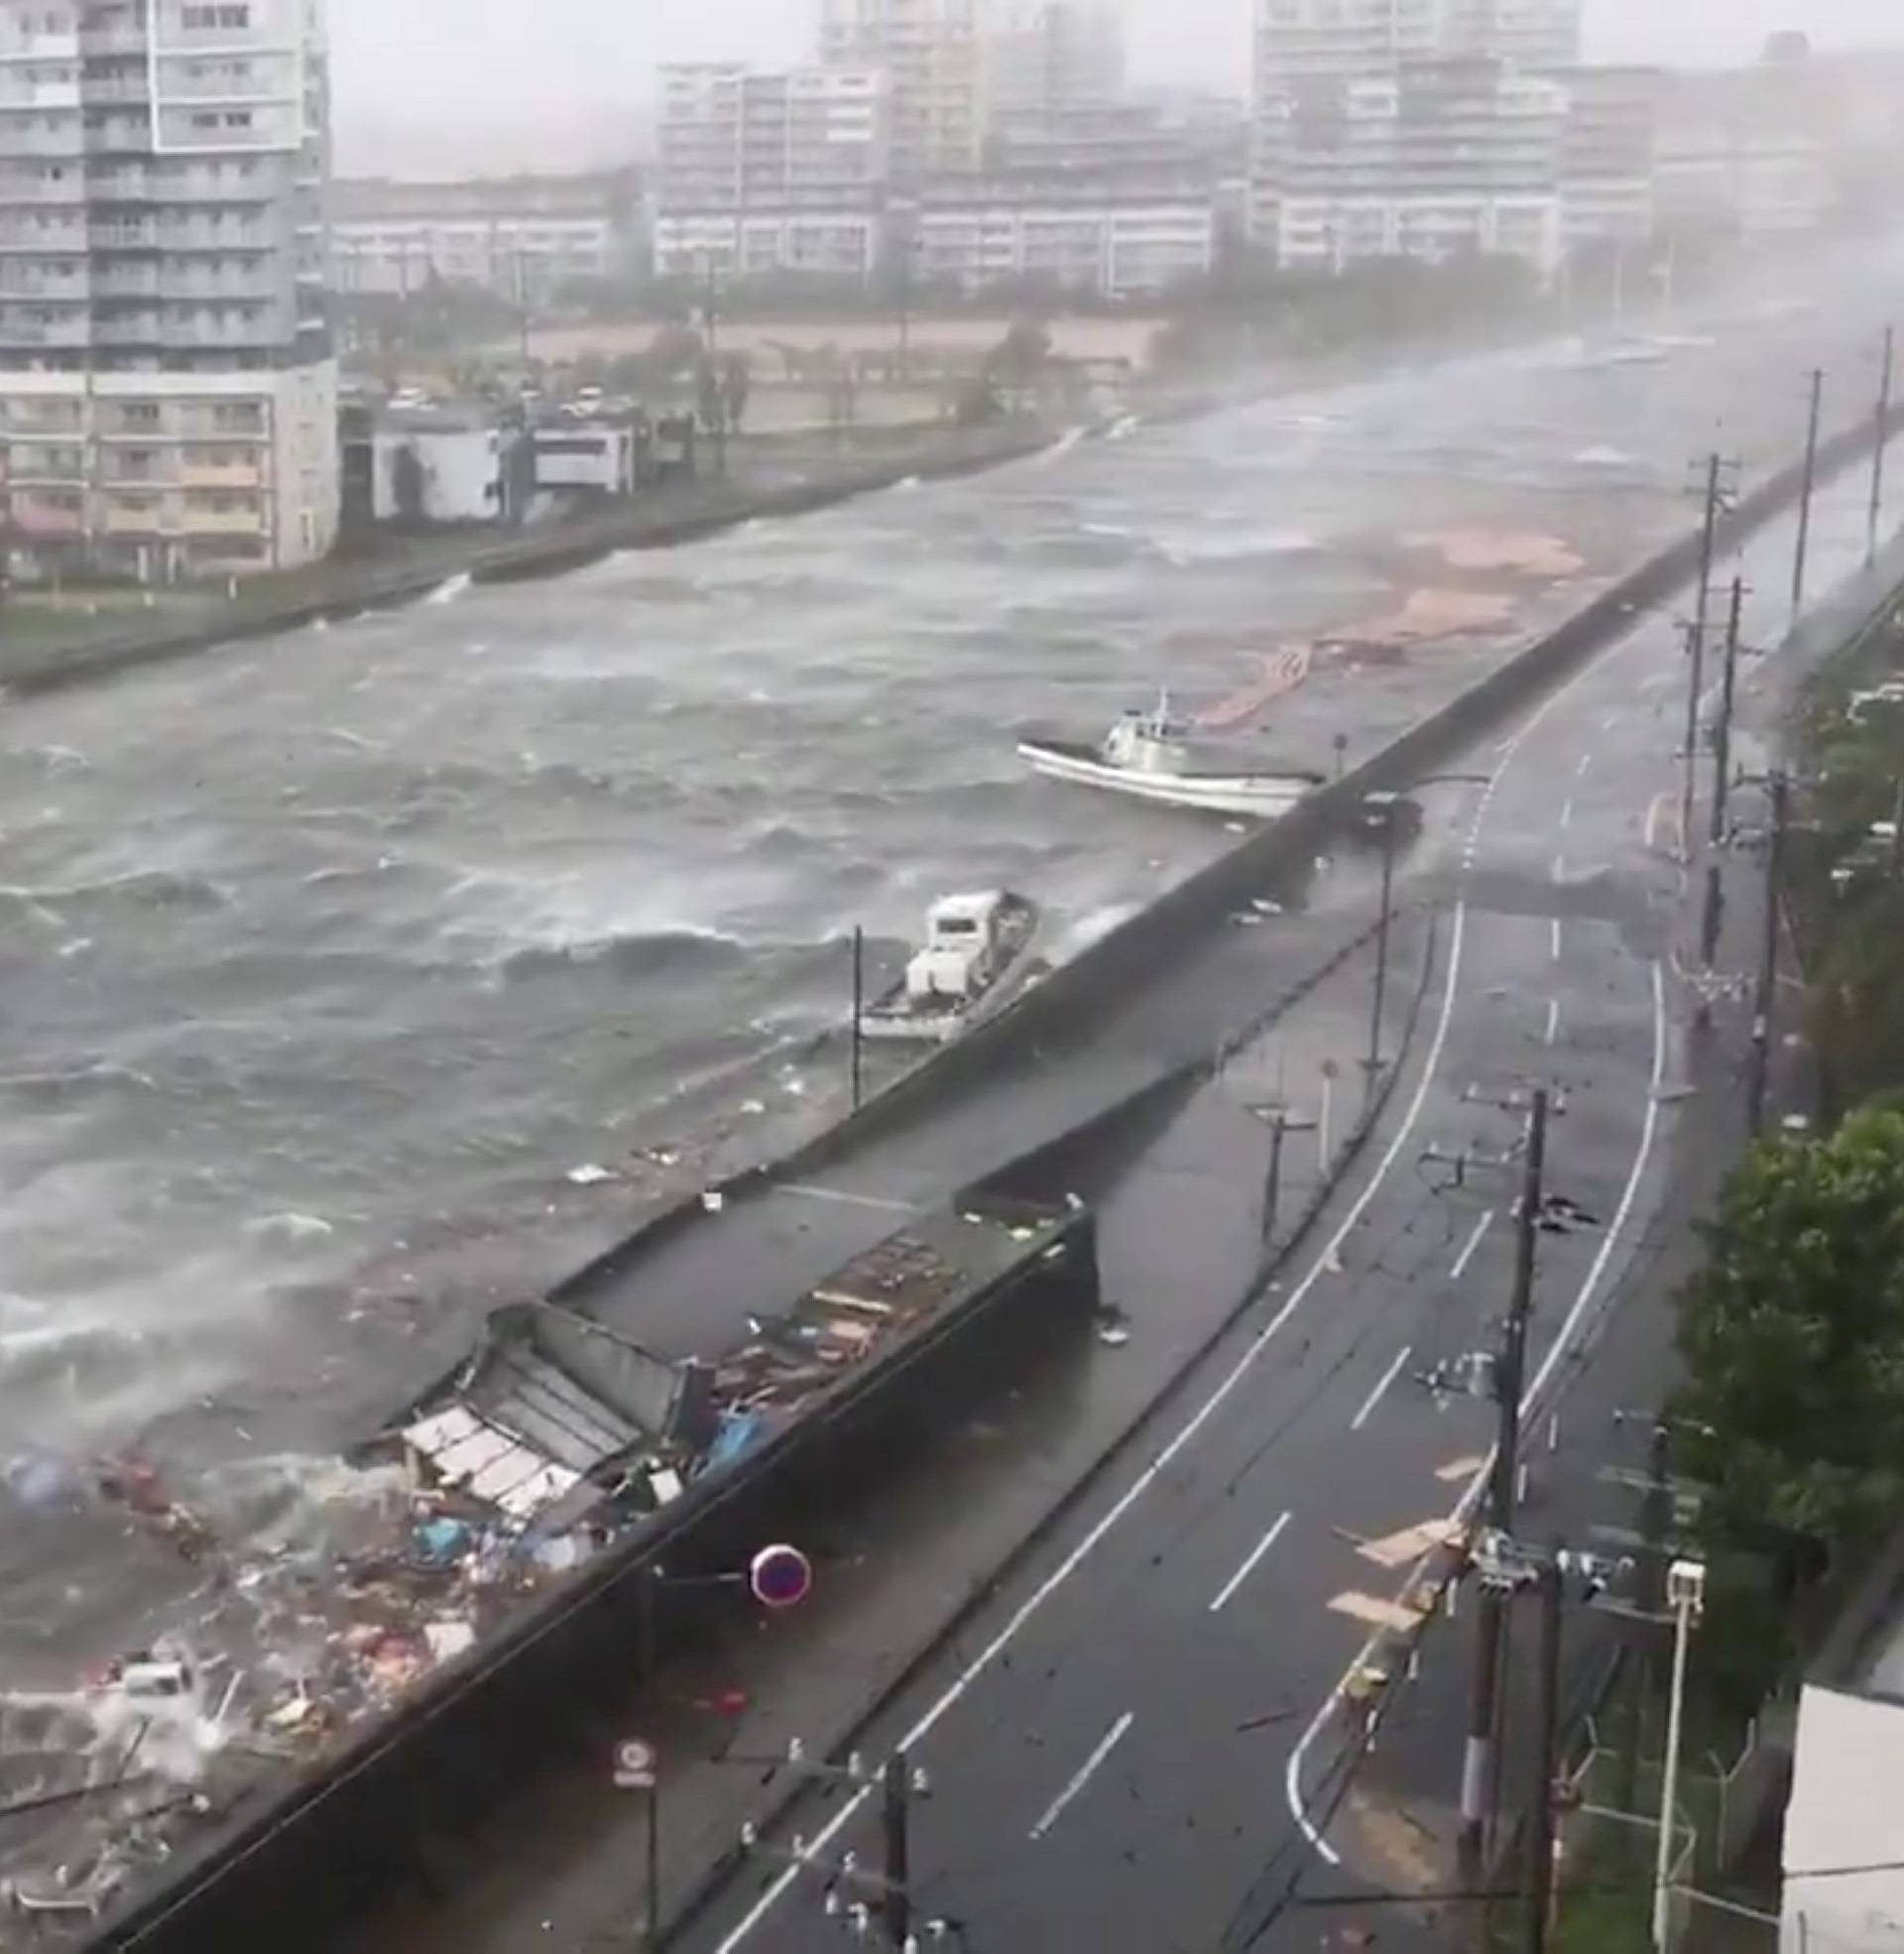 Boats float along with debris during Typhoon Jebi in Nishinomiya City